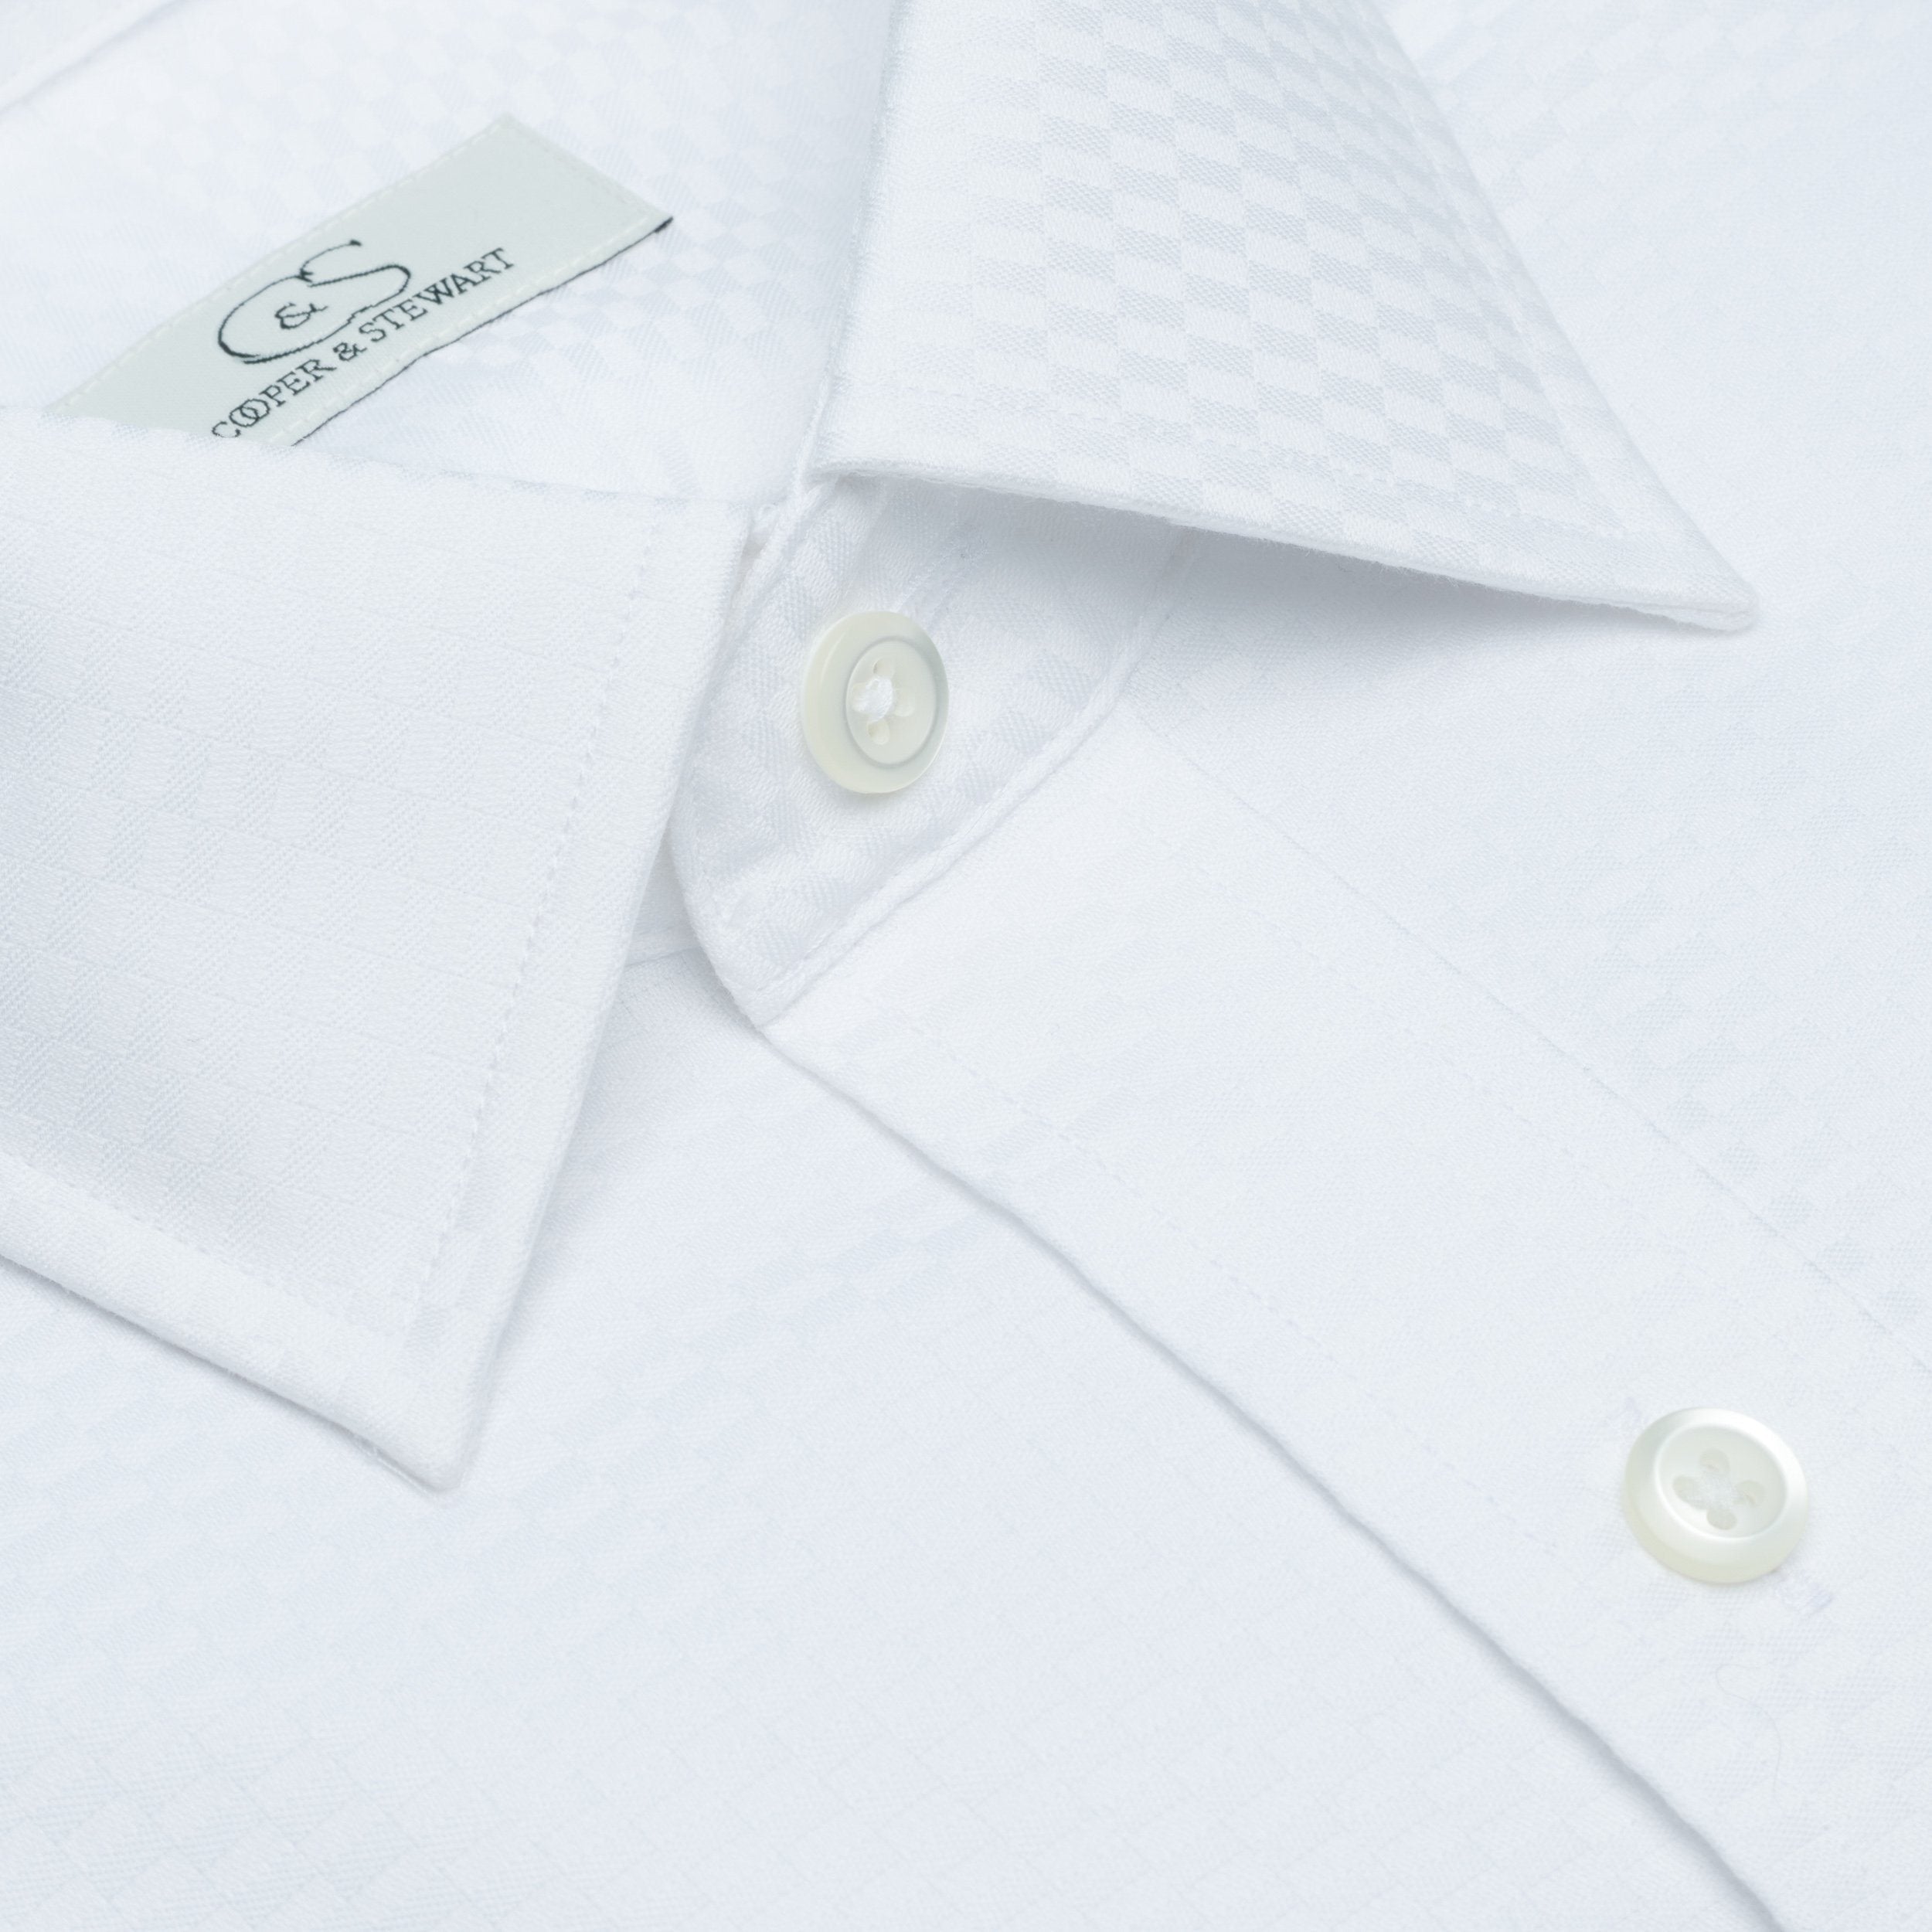 043 - White Tonal Check SC Dress Shirt Best Dress Shirt 